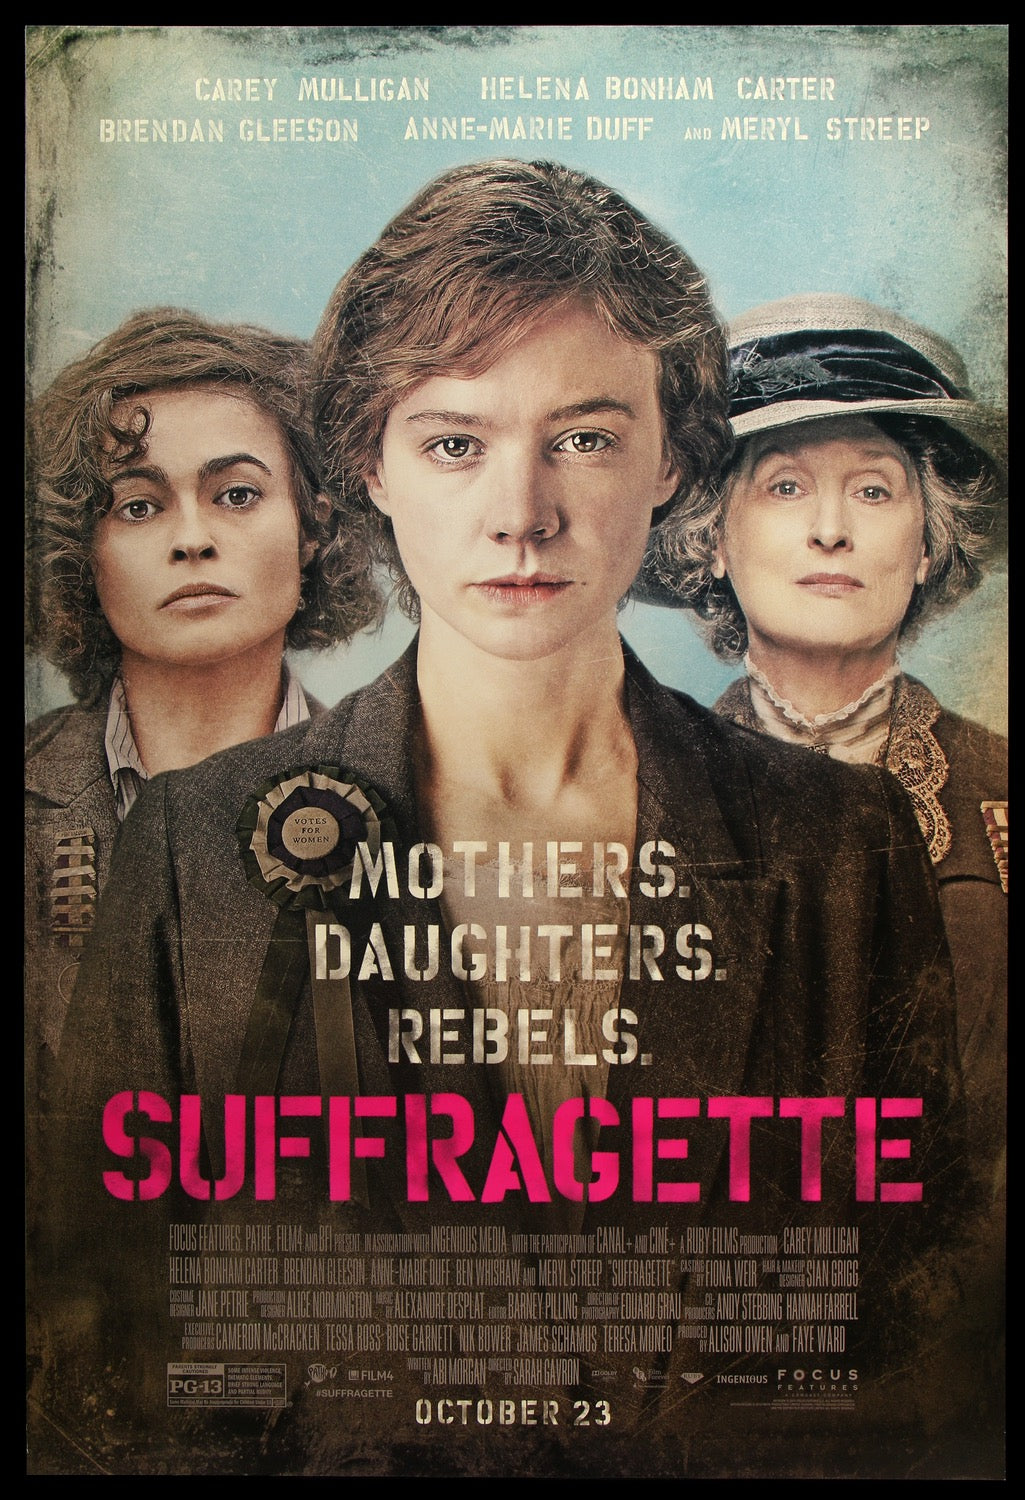 Suffragette (2015) original movie poster for sale at Original Film Art